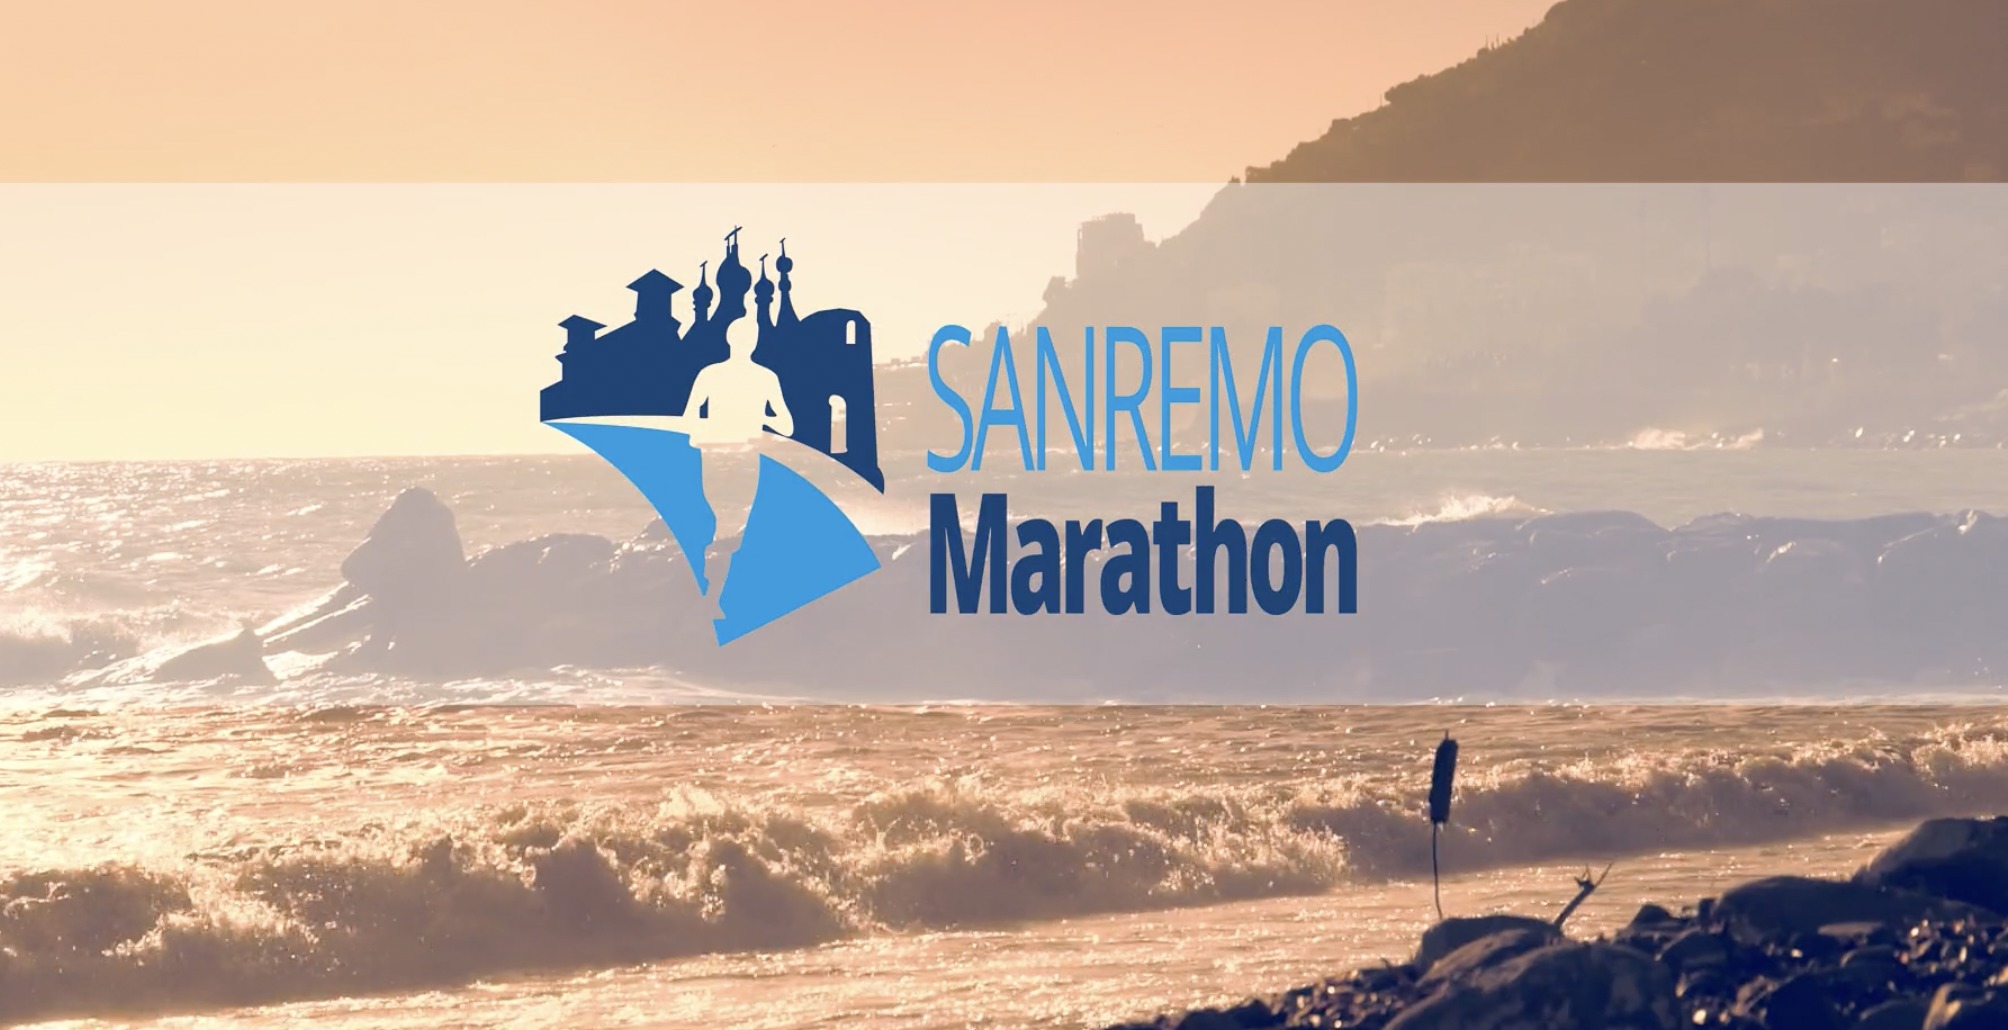 Sanremo Marathon